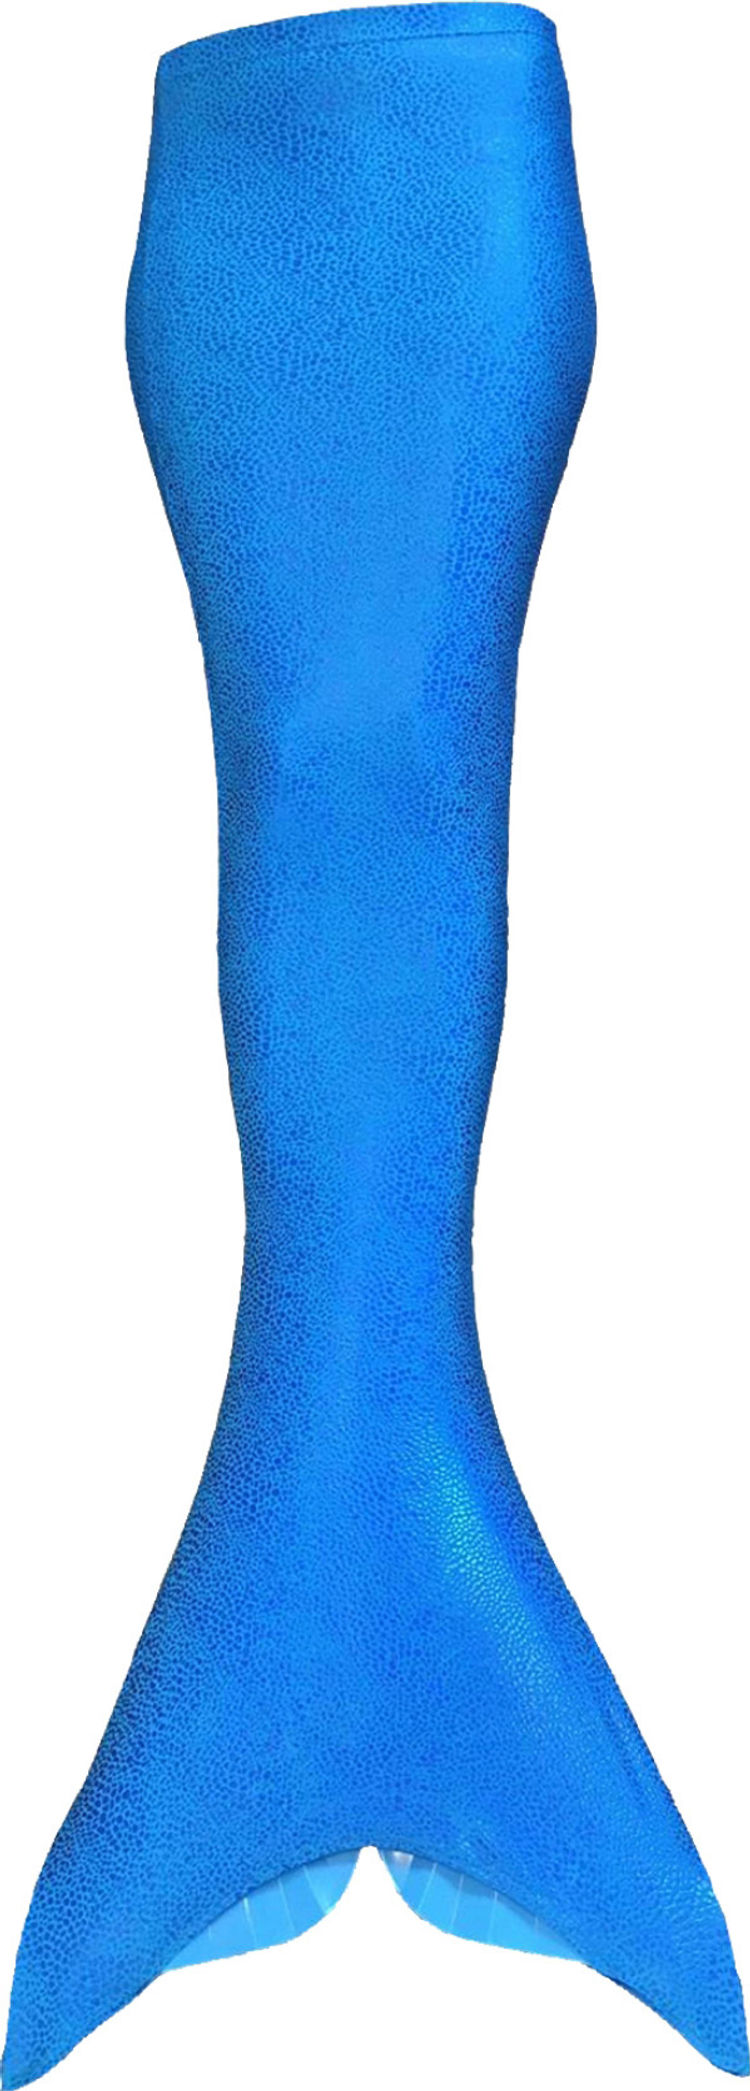 Aquatail - Flosse für Meerjungfrauen blau bestellen | Weltbild.de